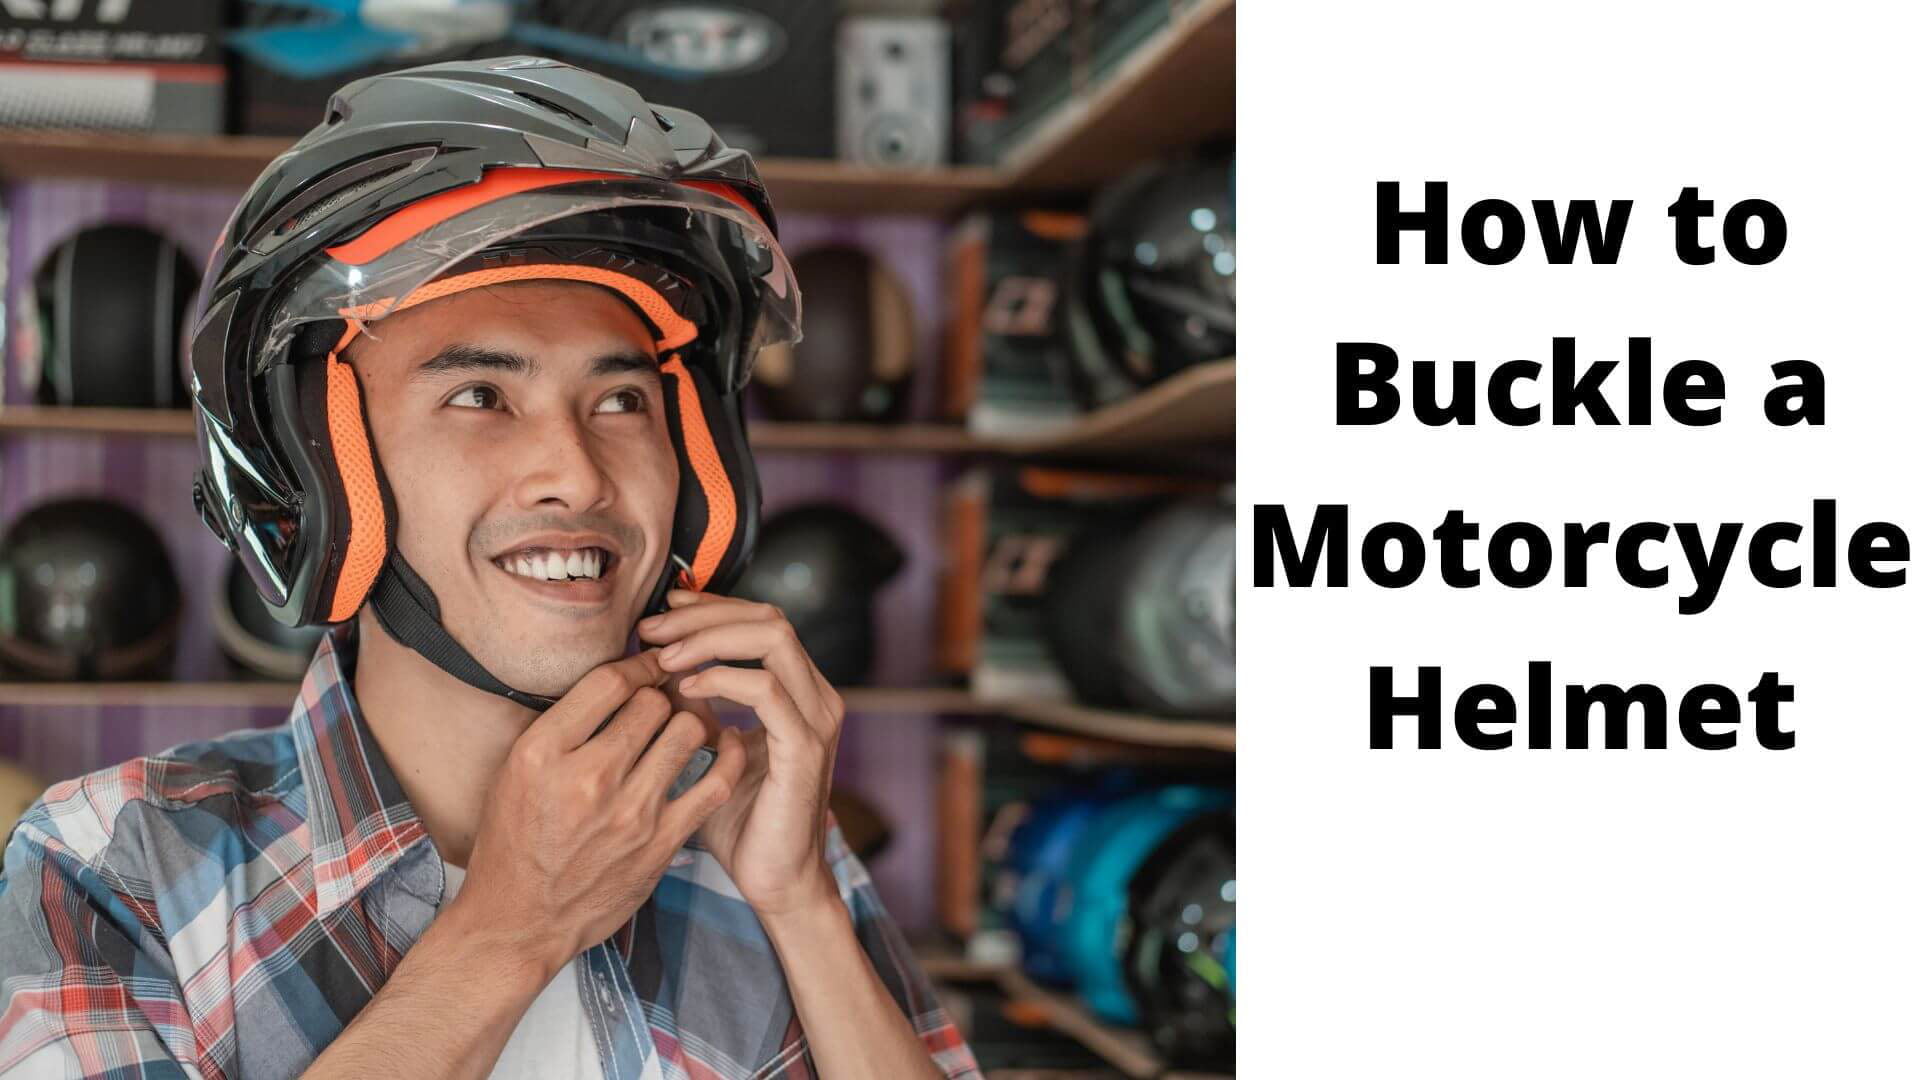 How to Buckle a Motorcycle Helmet